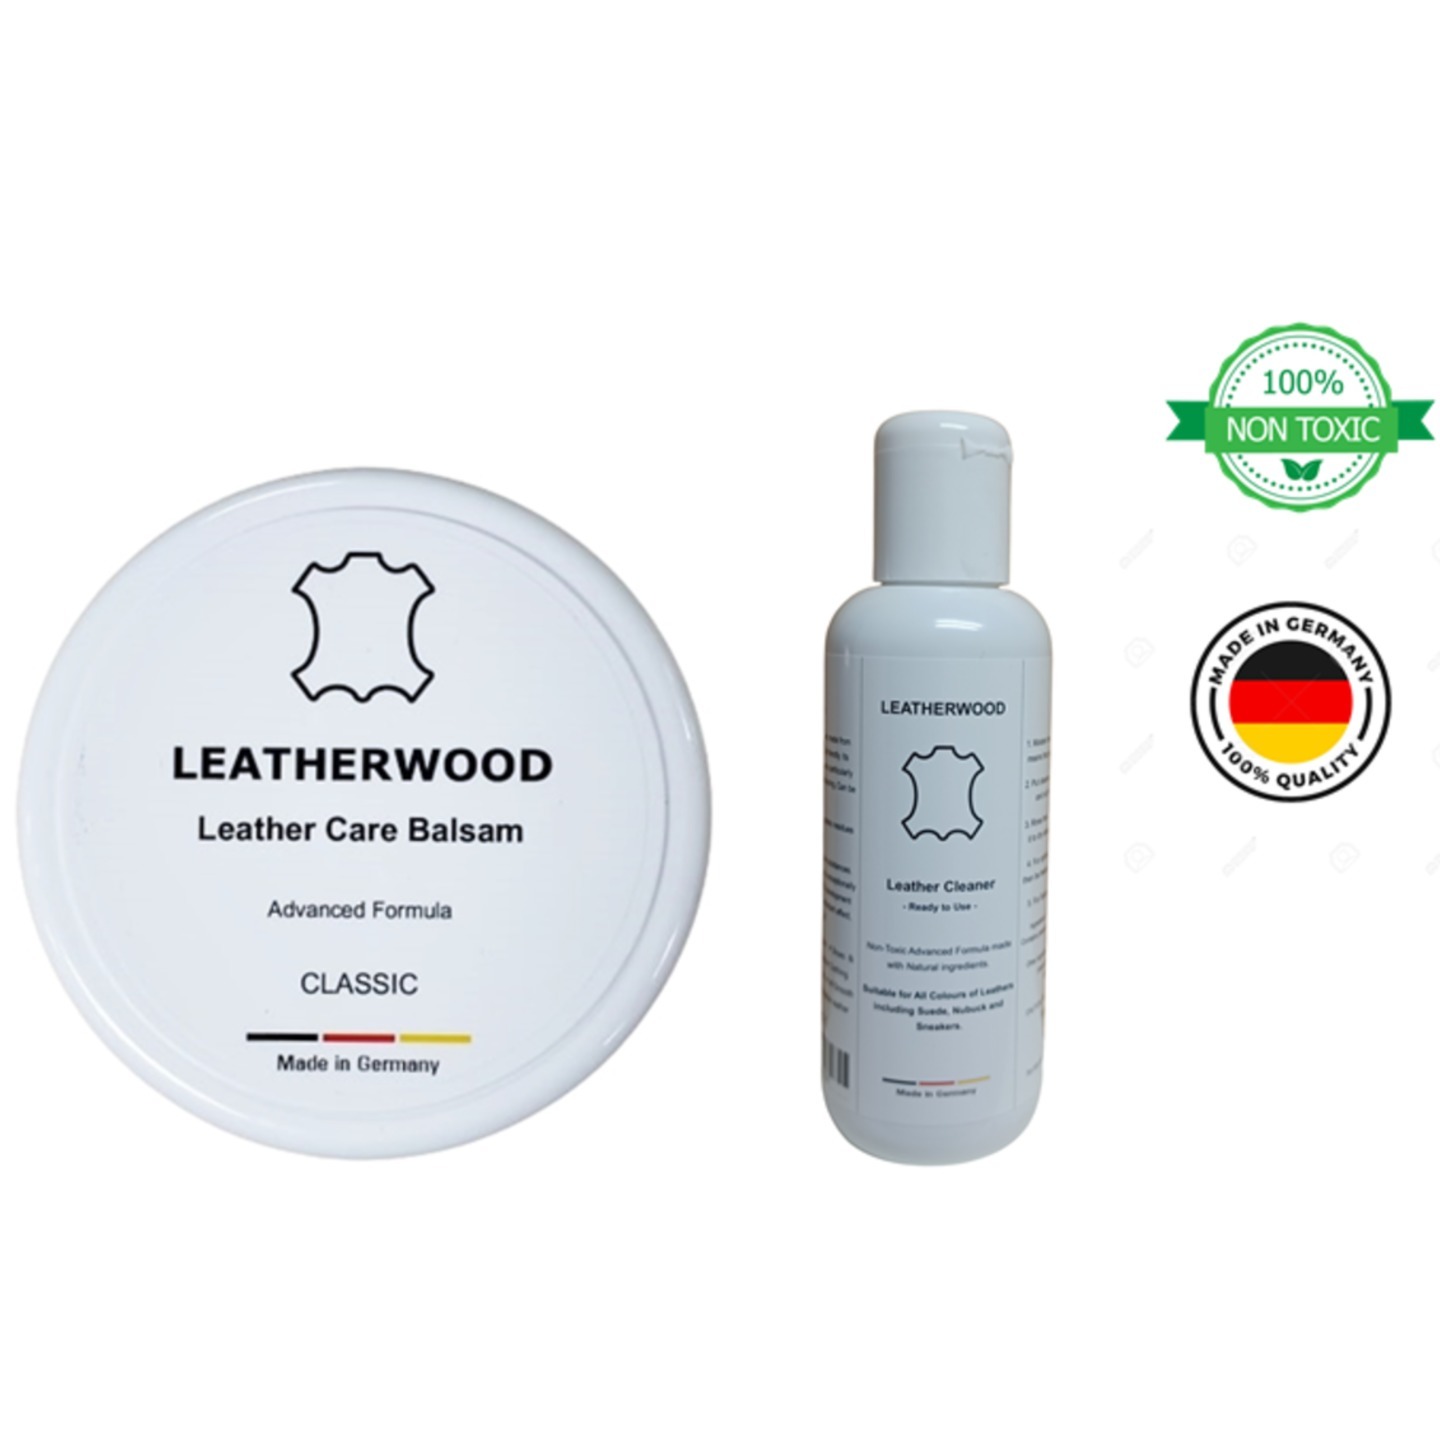 Leatherwood Cleaner & Leatherwood Classic Balsam Value Set 